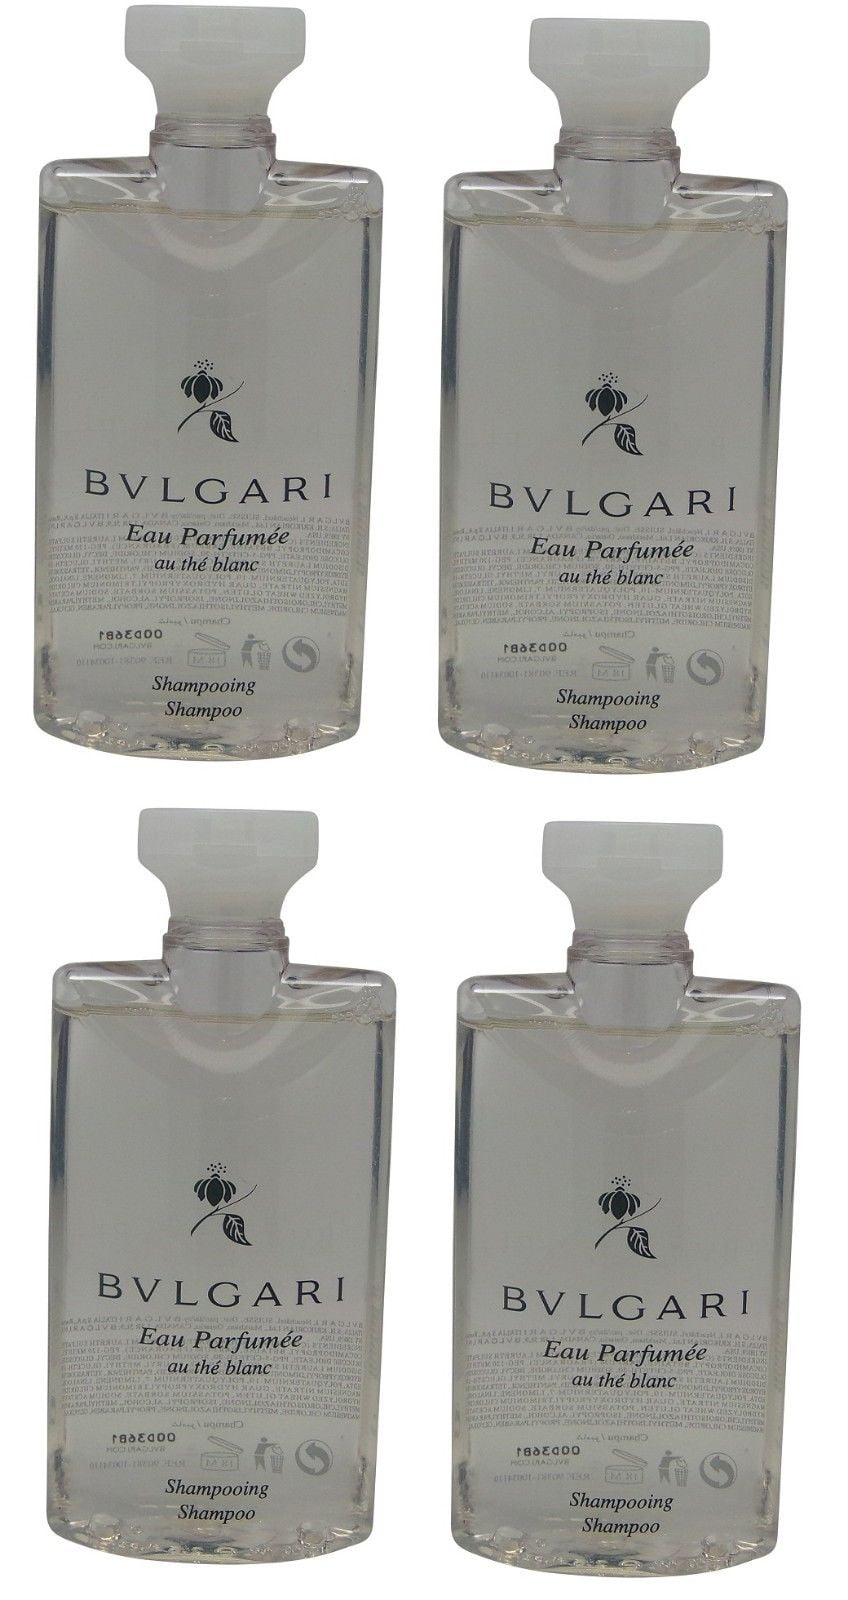 BVLGARI Au The Blanc (White Tea) Shampoo and Shower Gel Travel Size, 2.5  Ounce Bottles - Set of 3